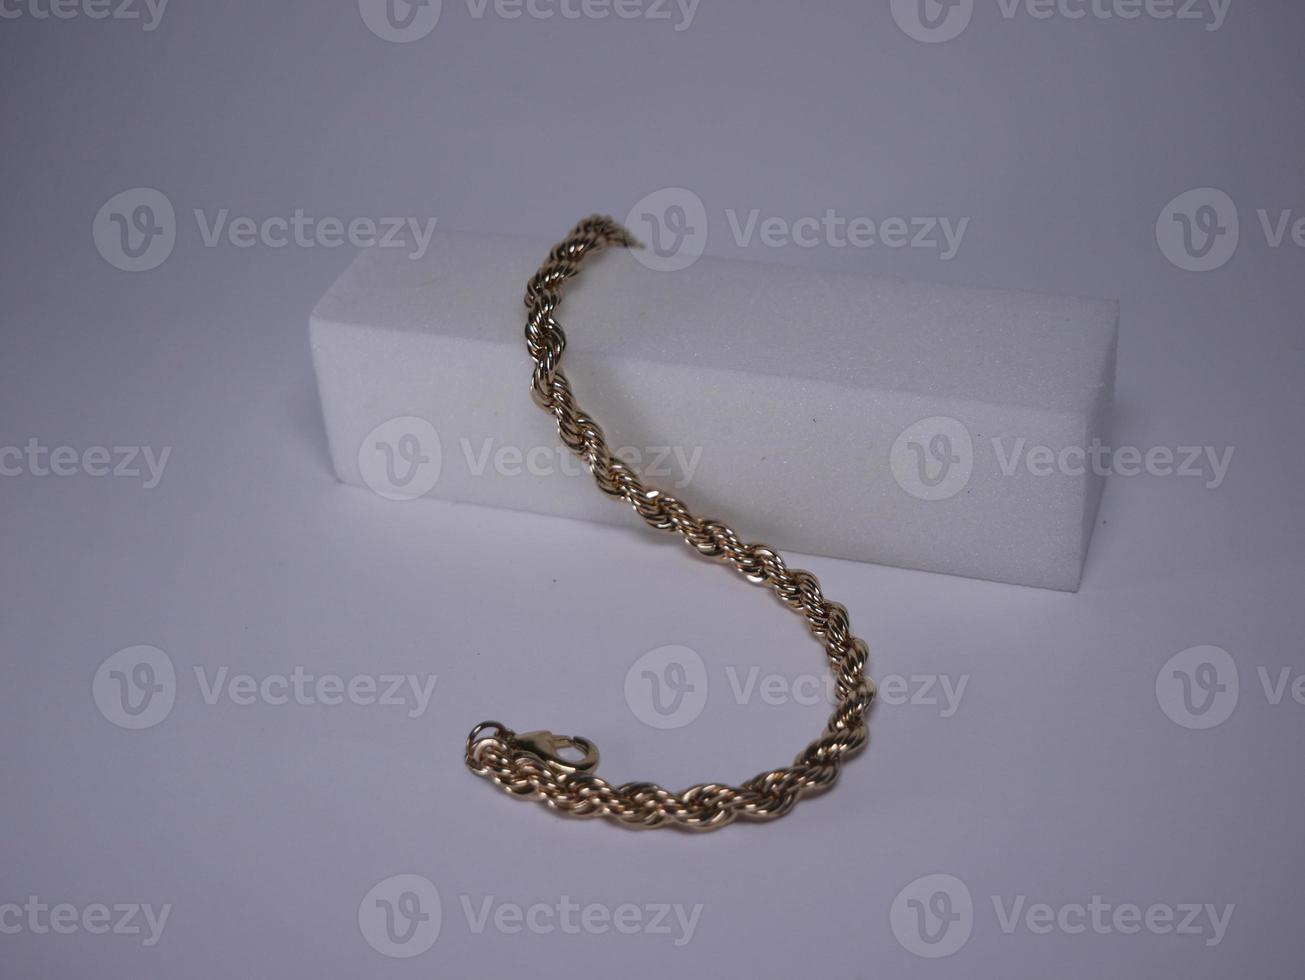 Golden bracelet shot close-up on a white background photo